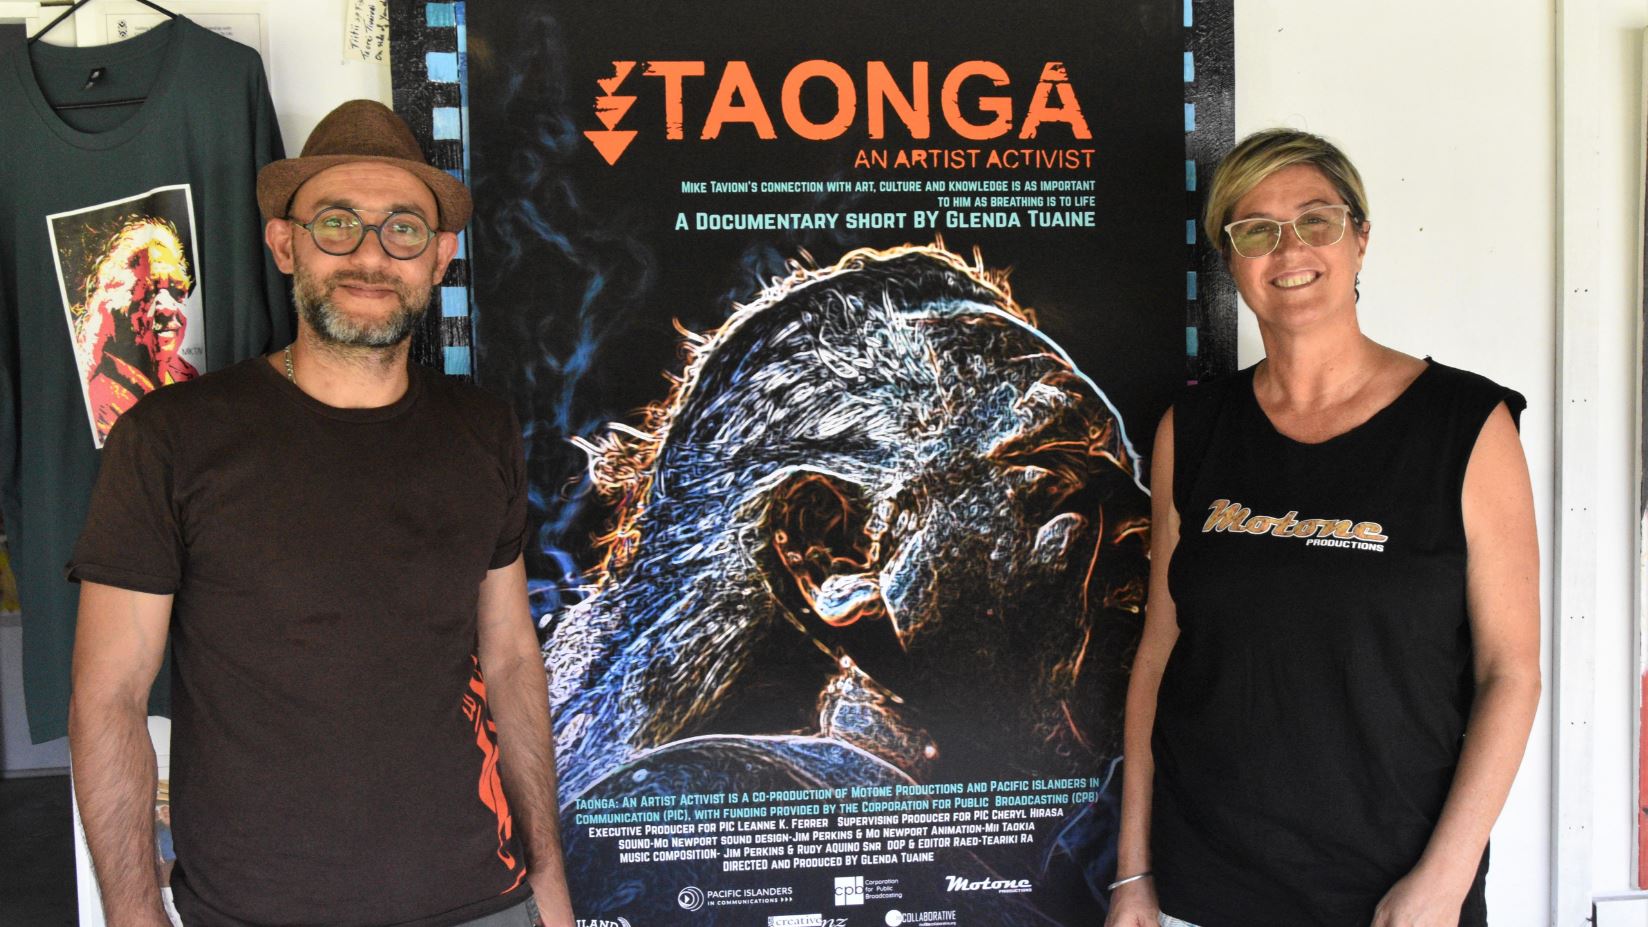 Taonga: An Artist Activist to premiere in Rarotonga tonight